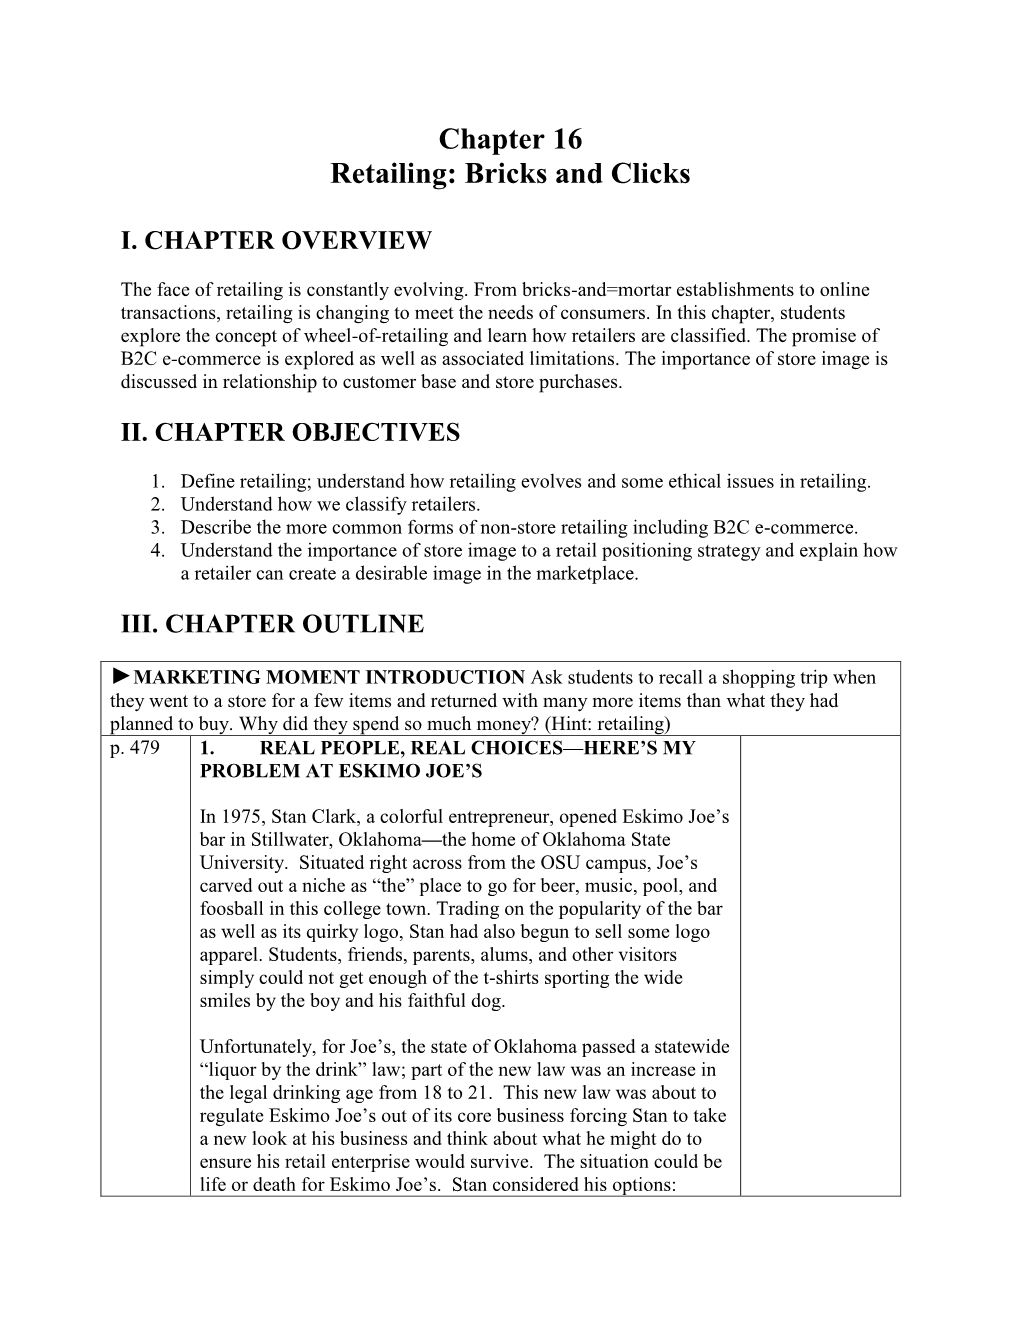 Chapter 16 Retailing: Bricks and Clicks